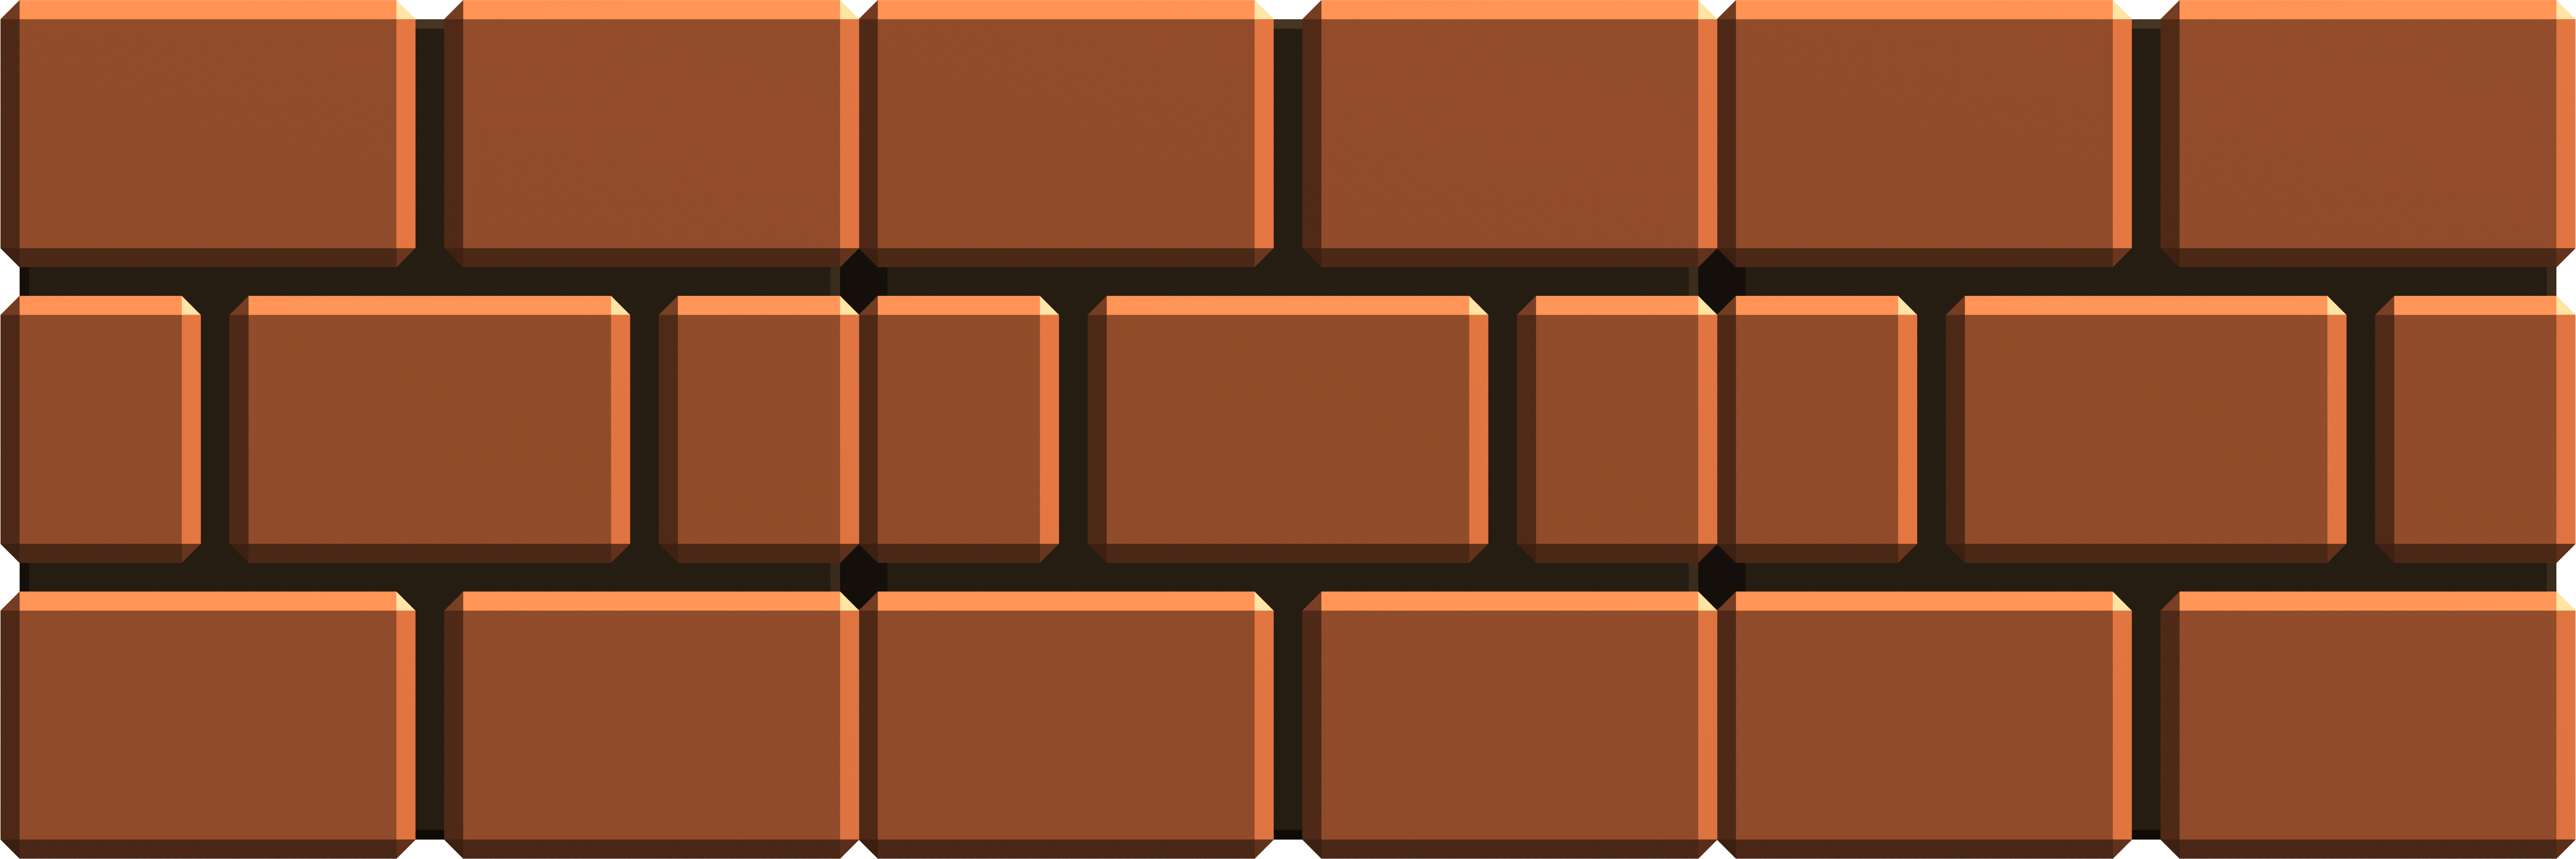 Brick block. Марио 2д кирпичи. Блоки кирпич из Марио 2д. Блоки из Марио 2d. Блок кирпич 2d 40x40.